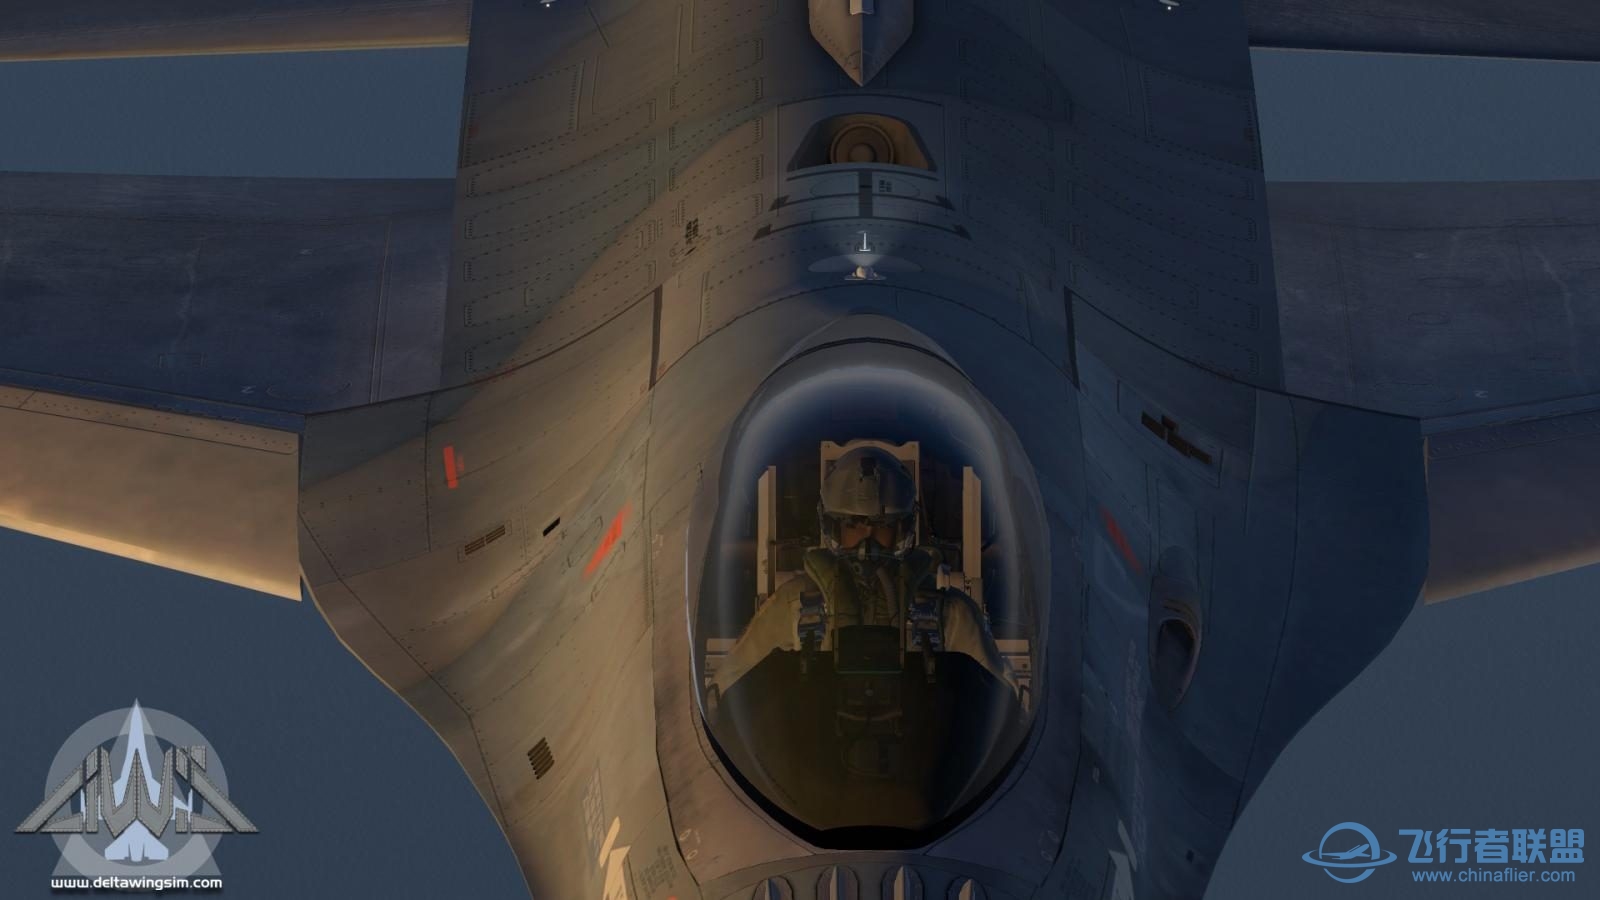 DeltaWing Simulations 发布 F-16C XPL-4323 